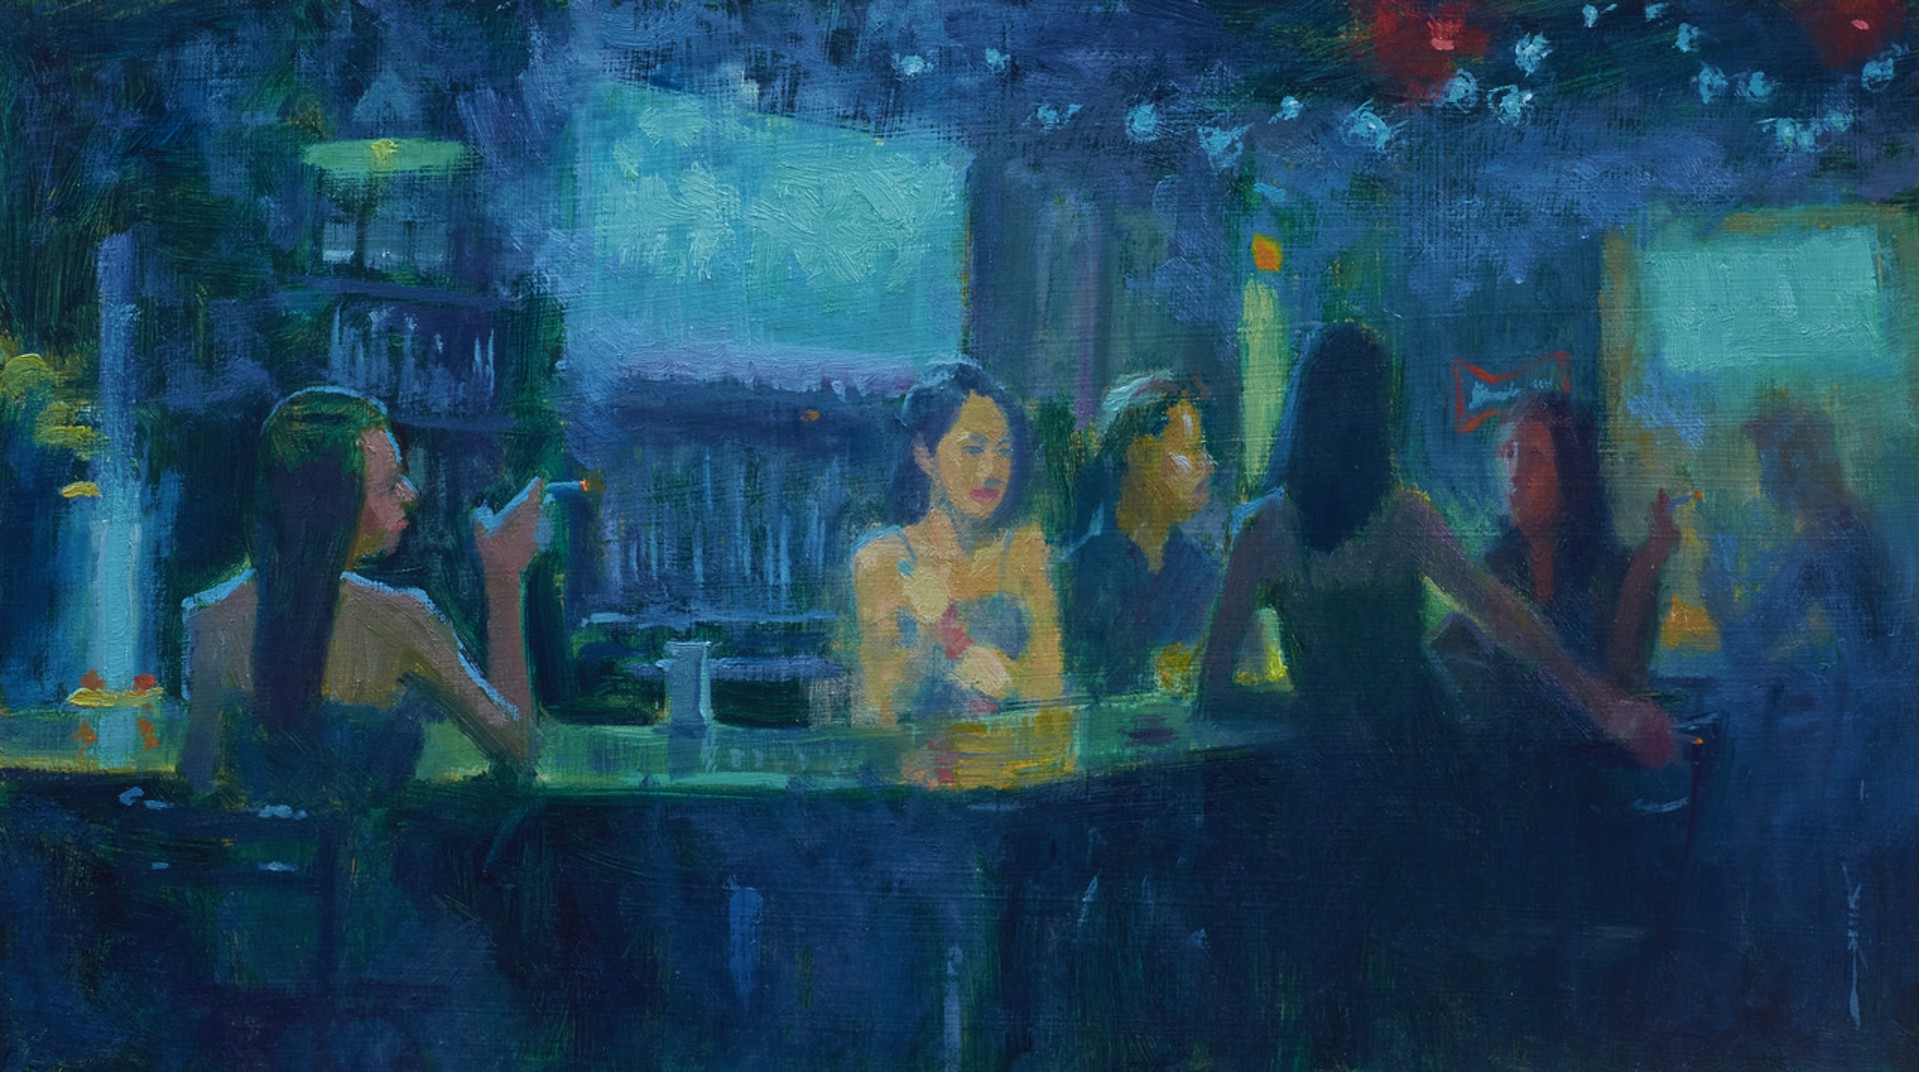 Gossip at the Bar by Doug Clarke